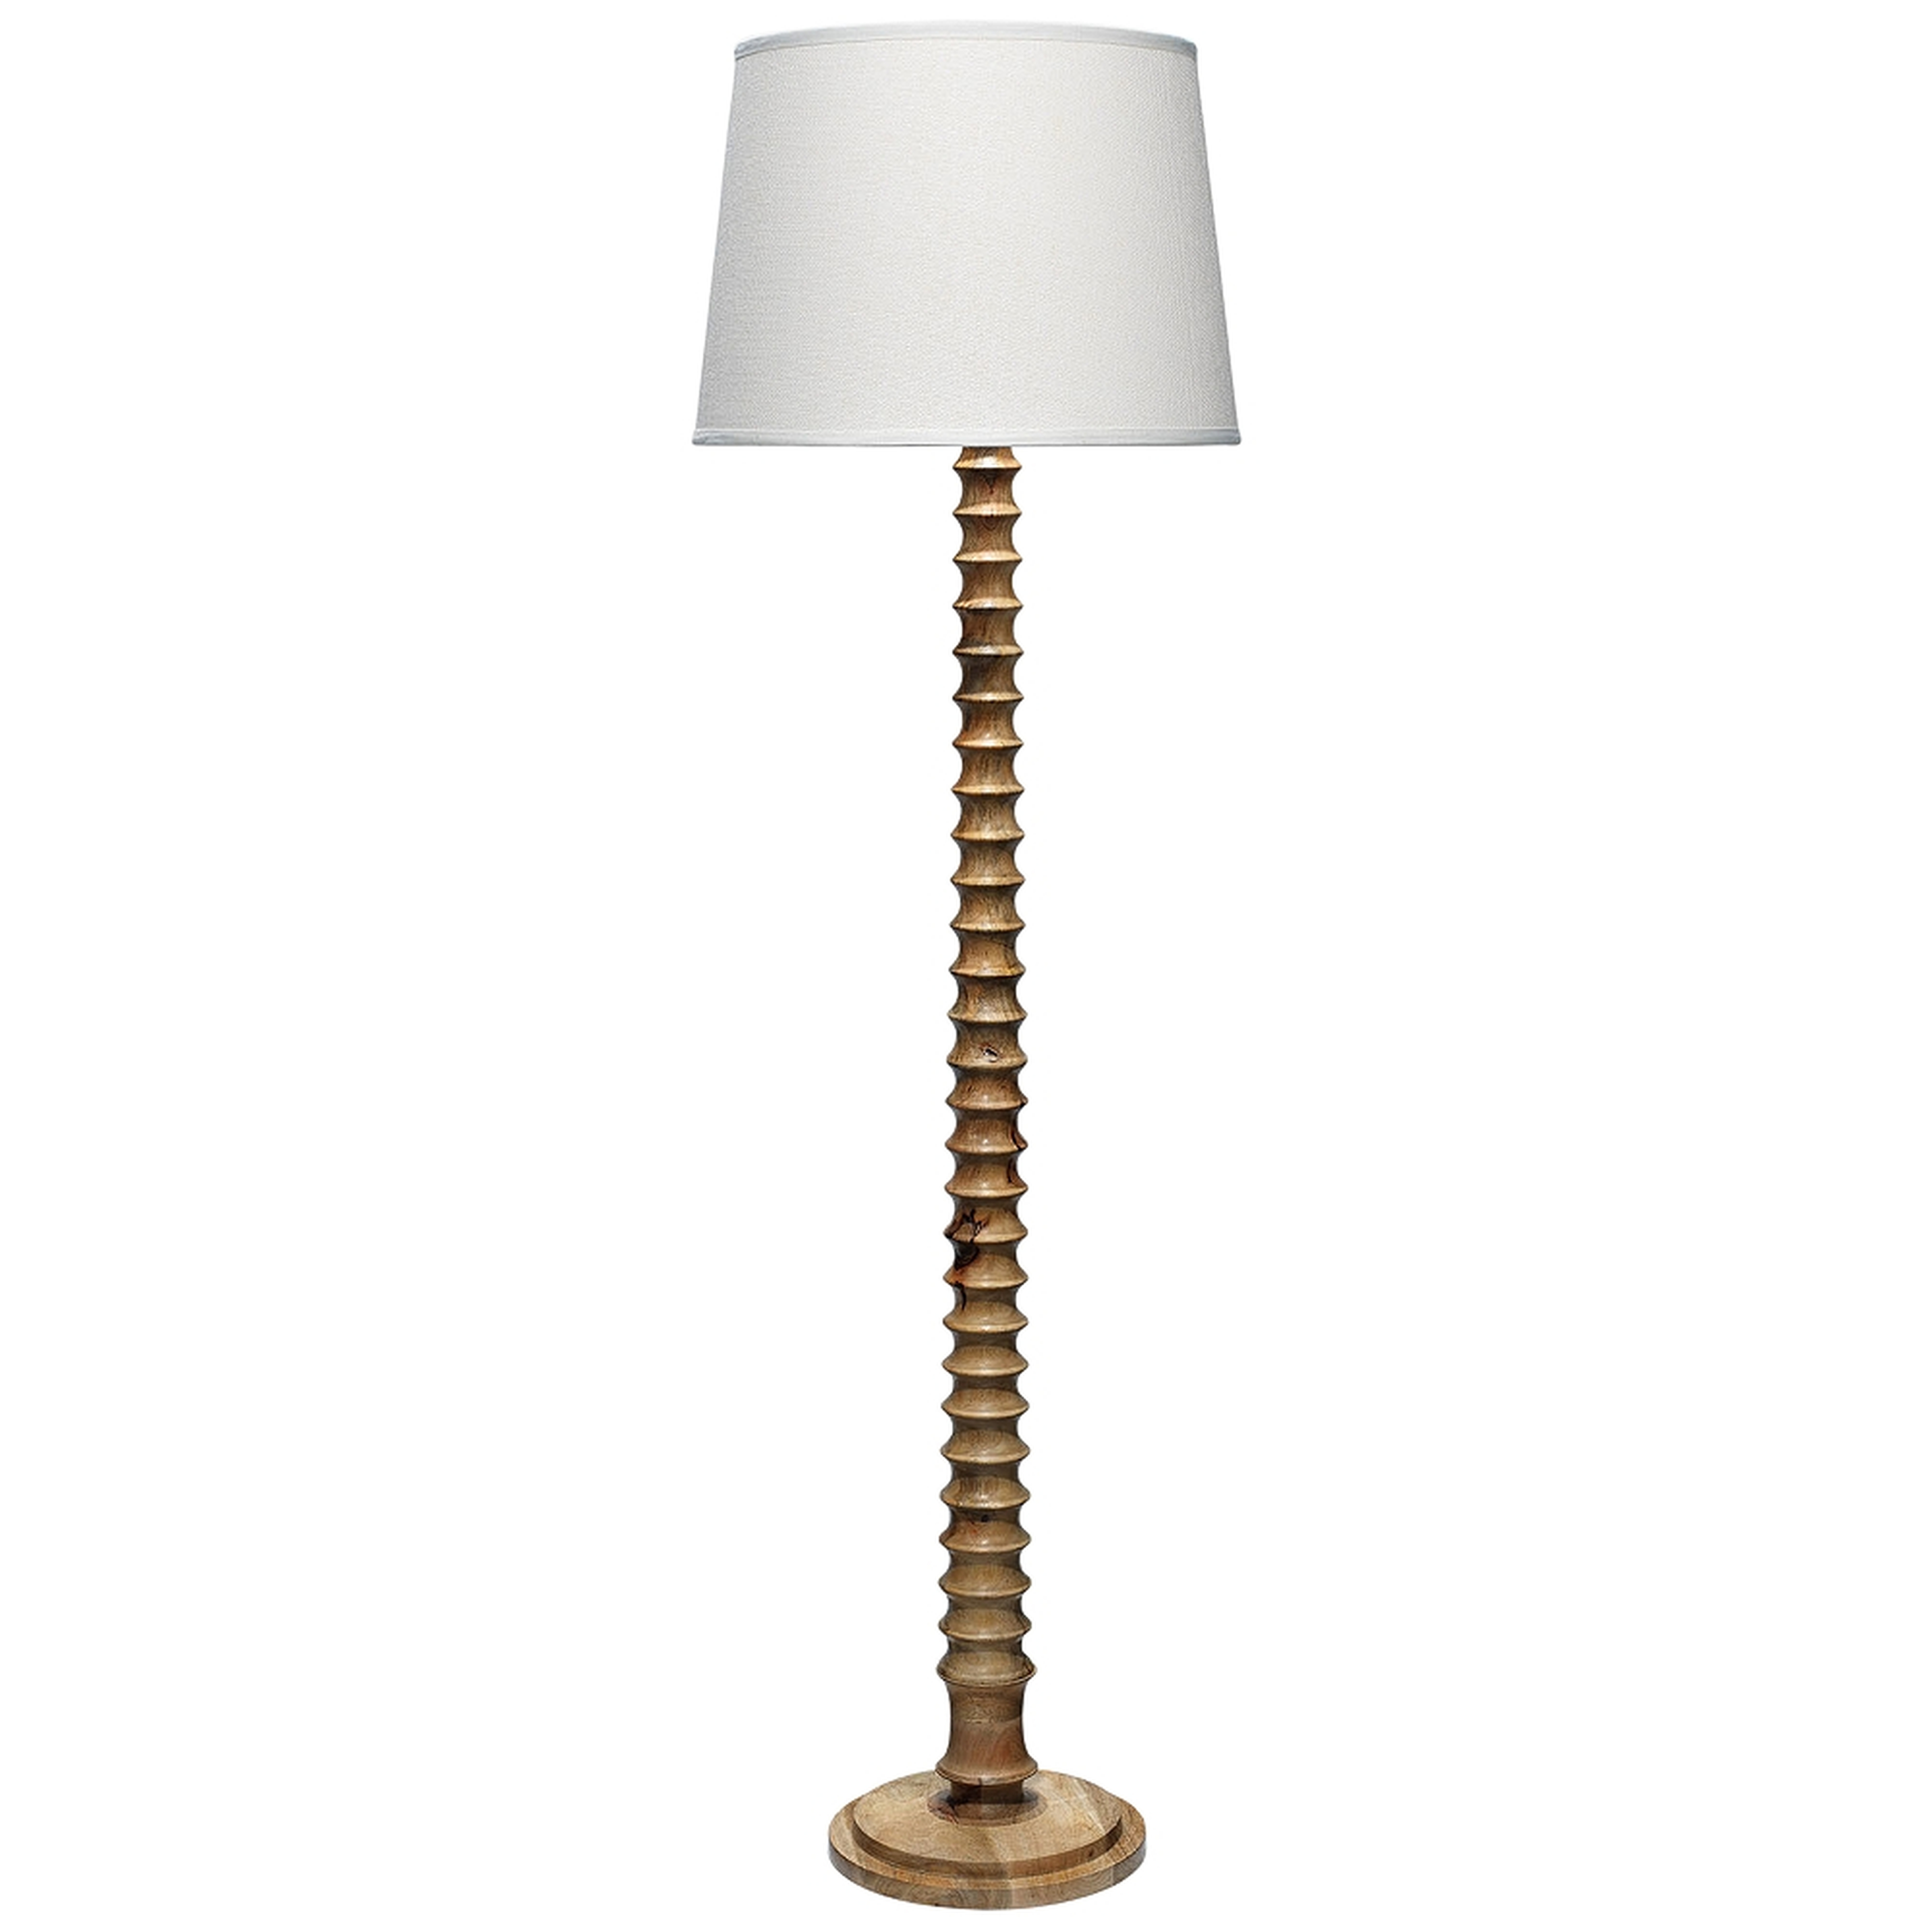 Jamie Young Revolution Mango Wood Column Floor Lamp - Style # 82V07 - Lamps Plus